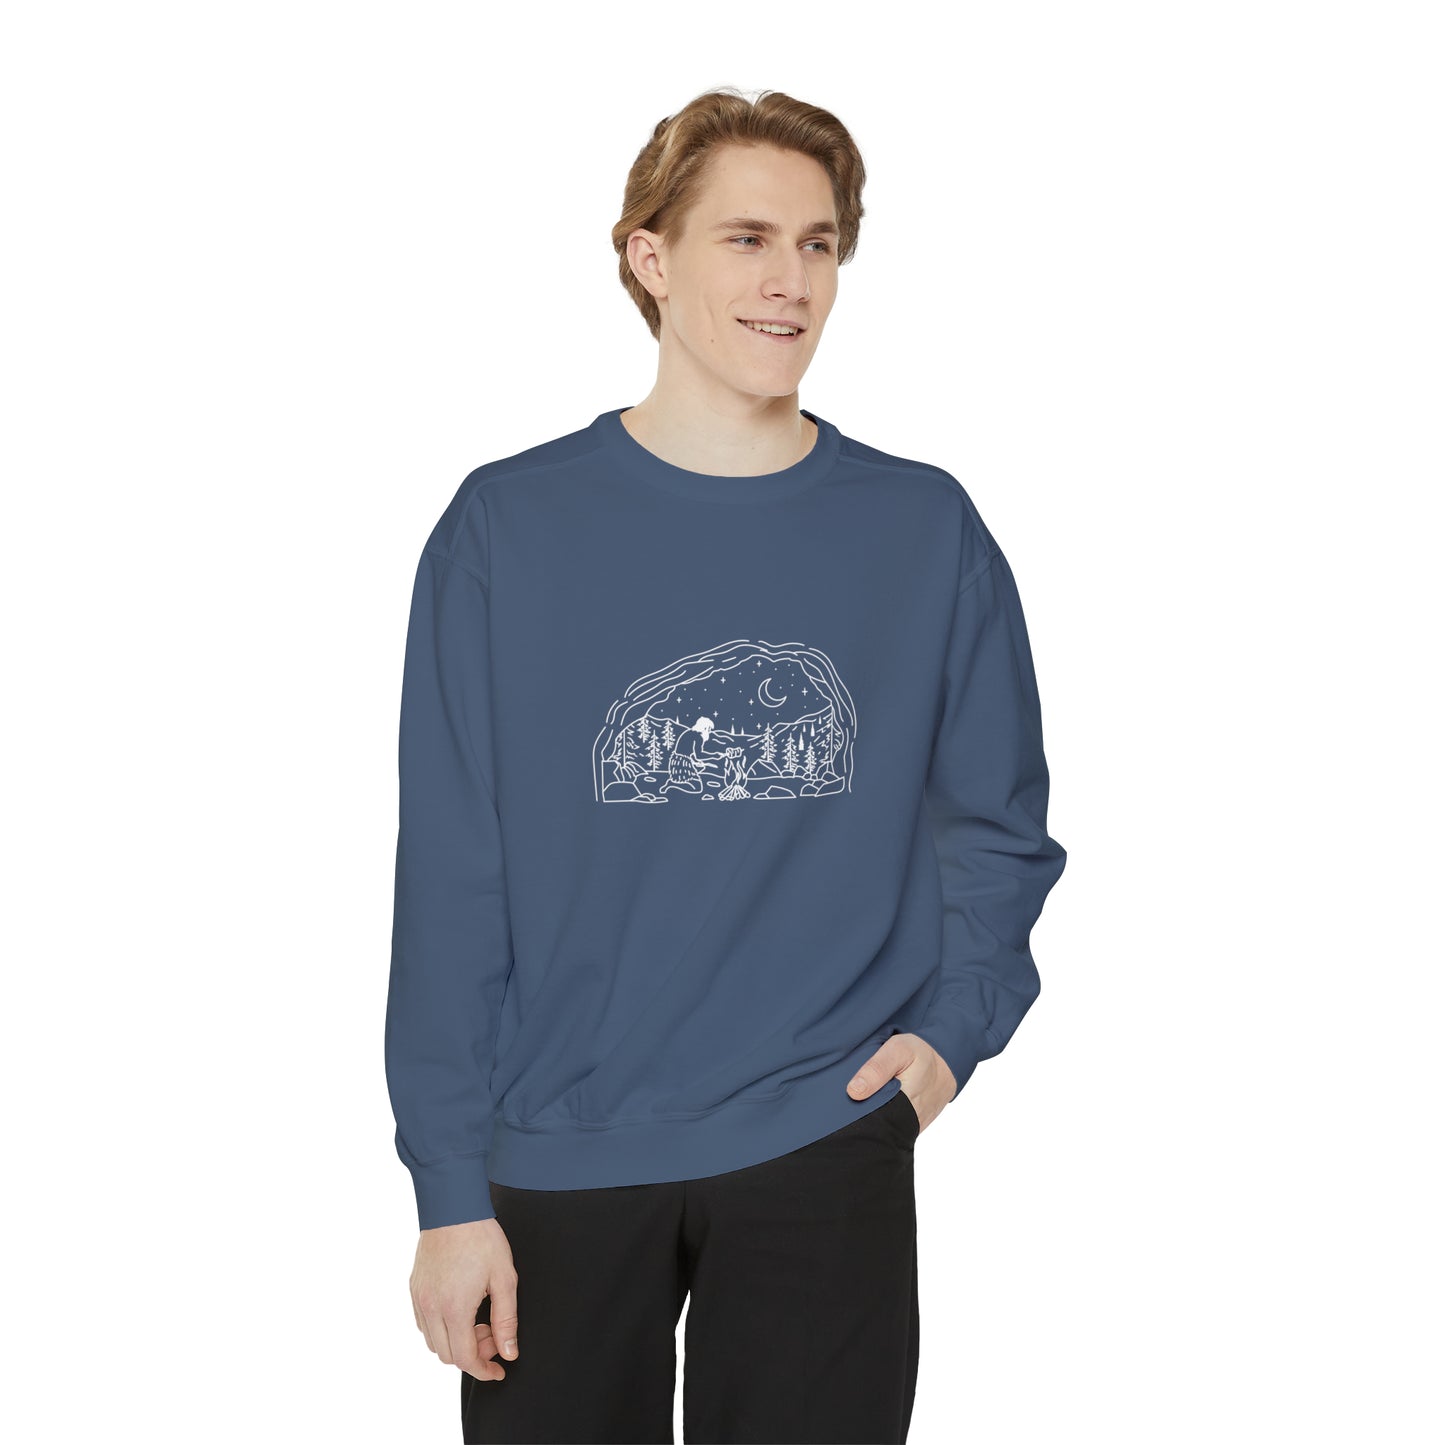 Caveman - wht - Unisex Garment-Dyed Sweatshirt